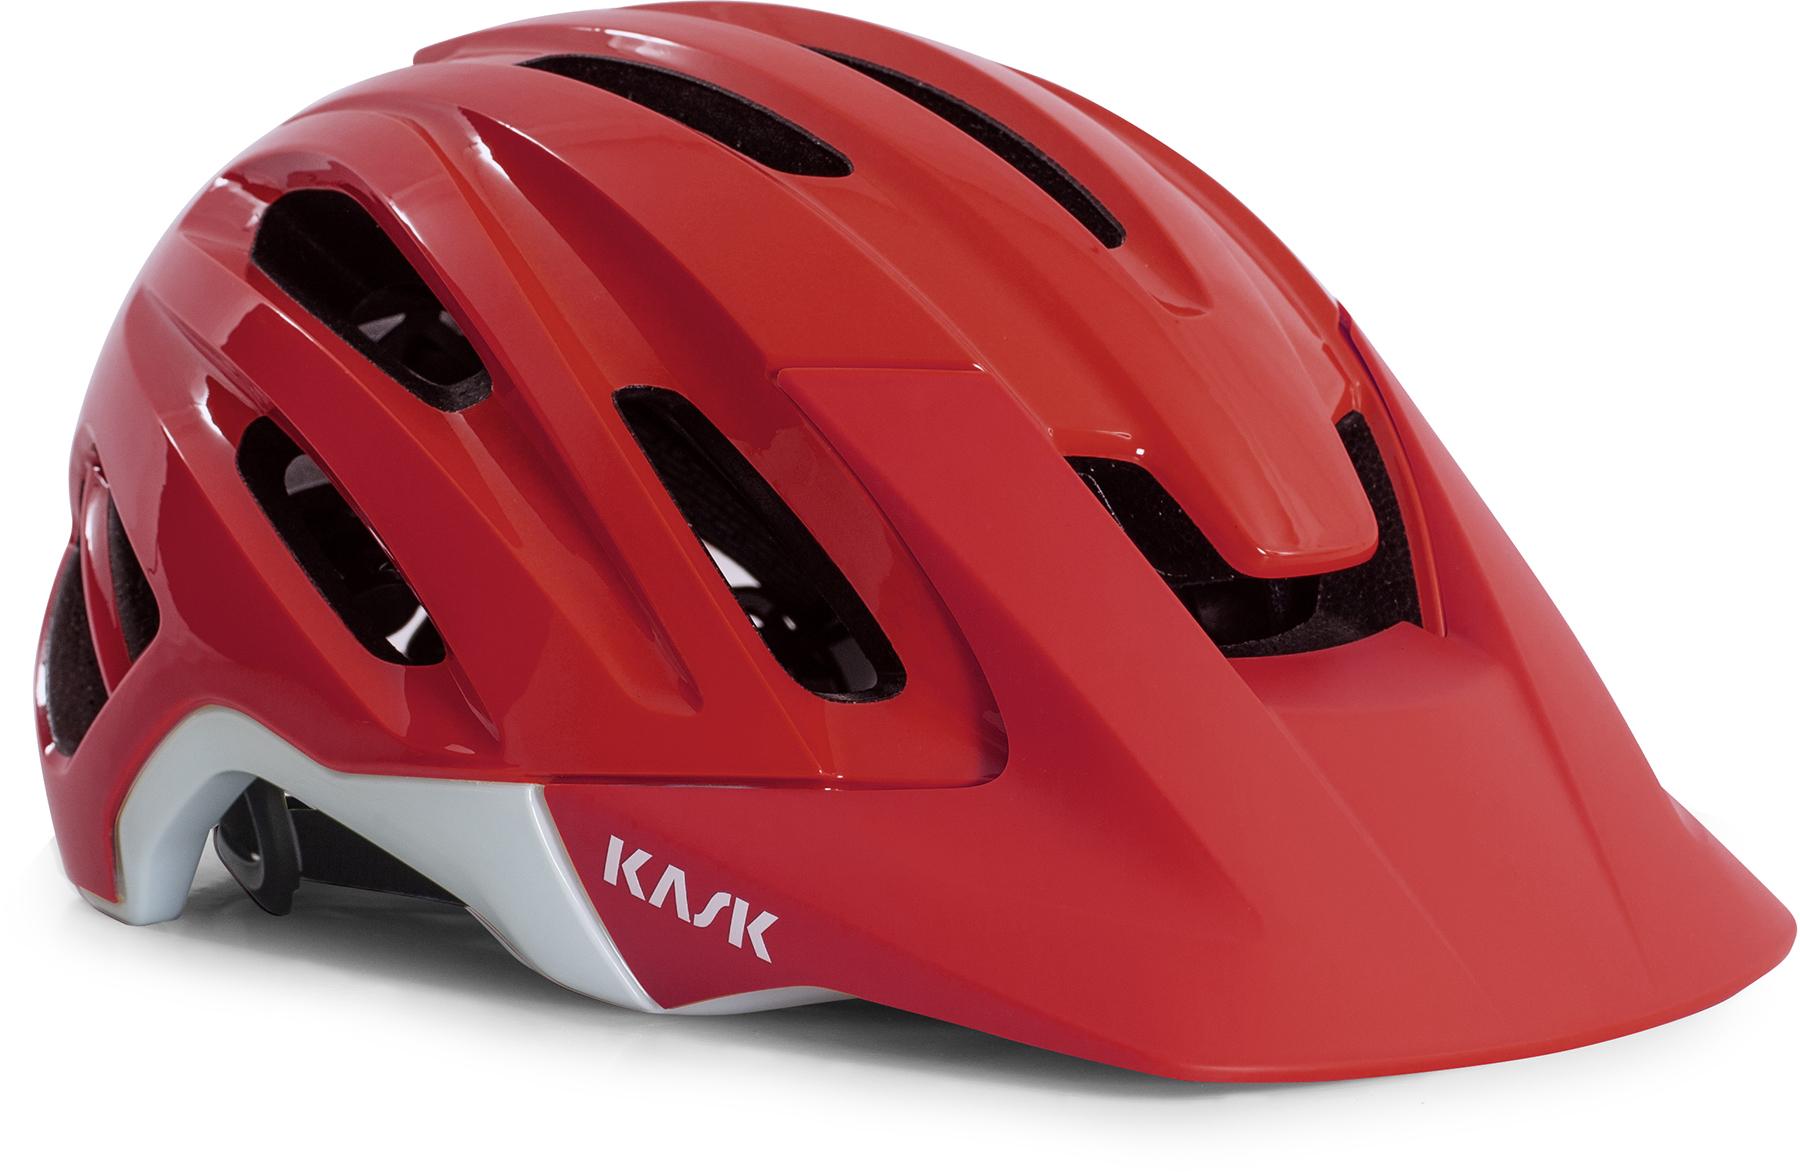 Kask Caipi Mtb Cycling Helmet (wg11) - Red